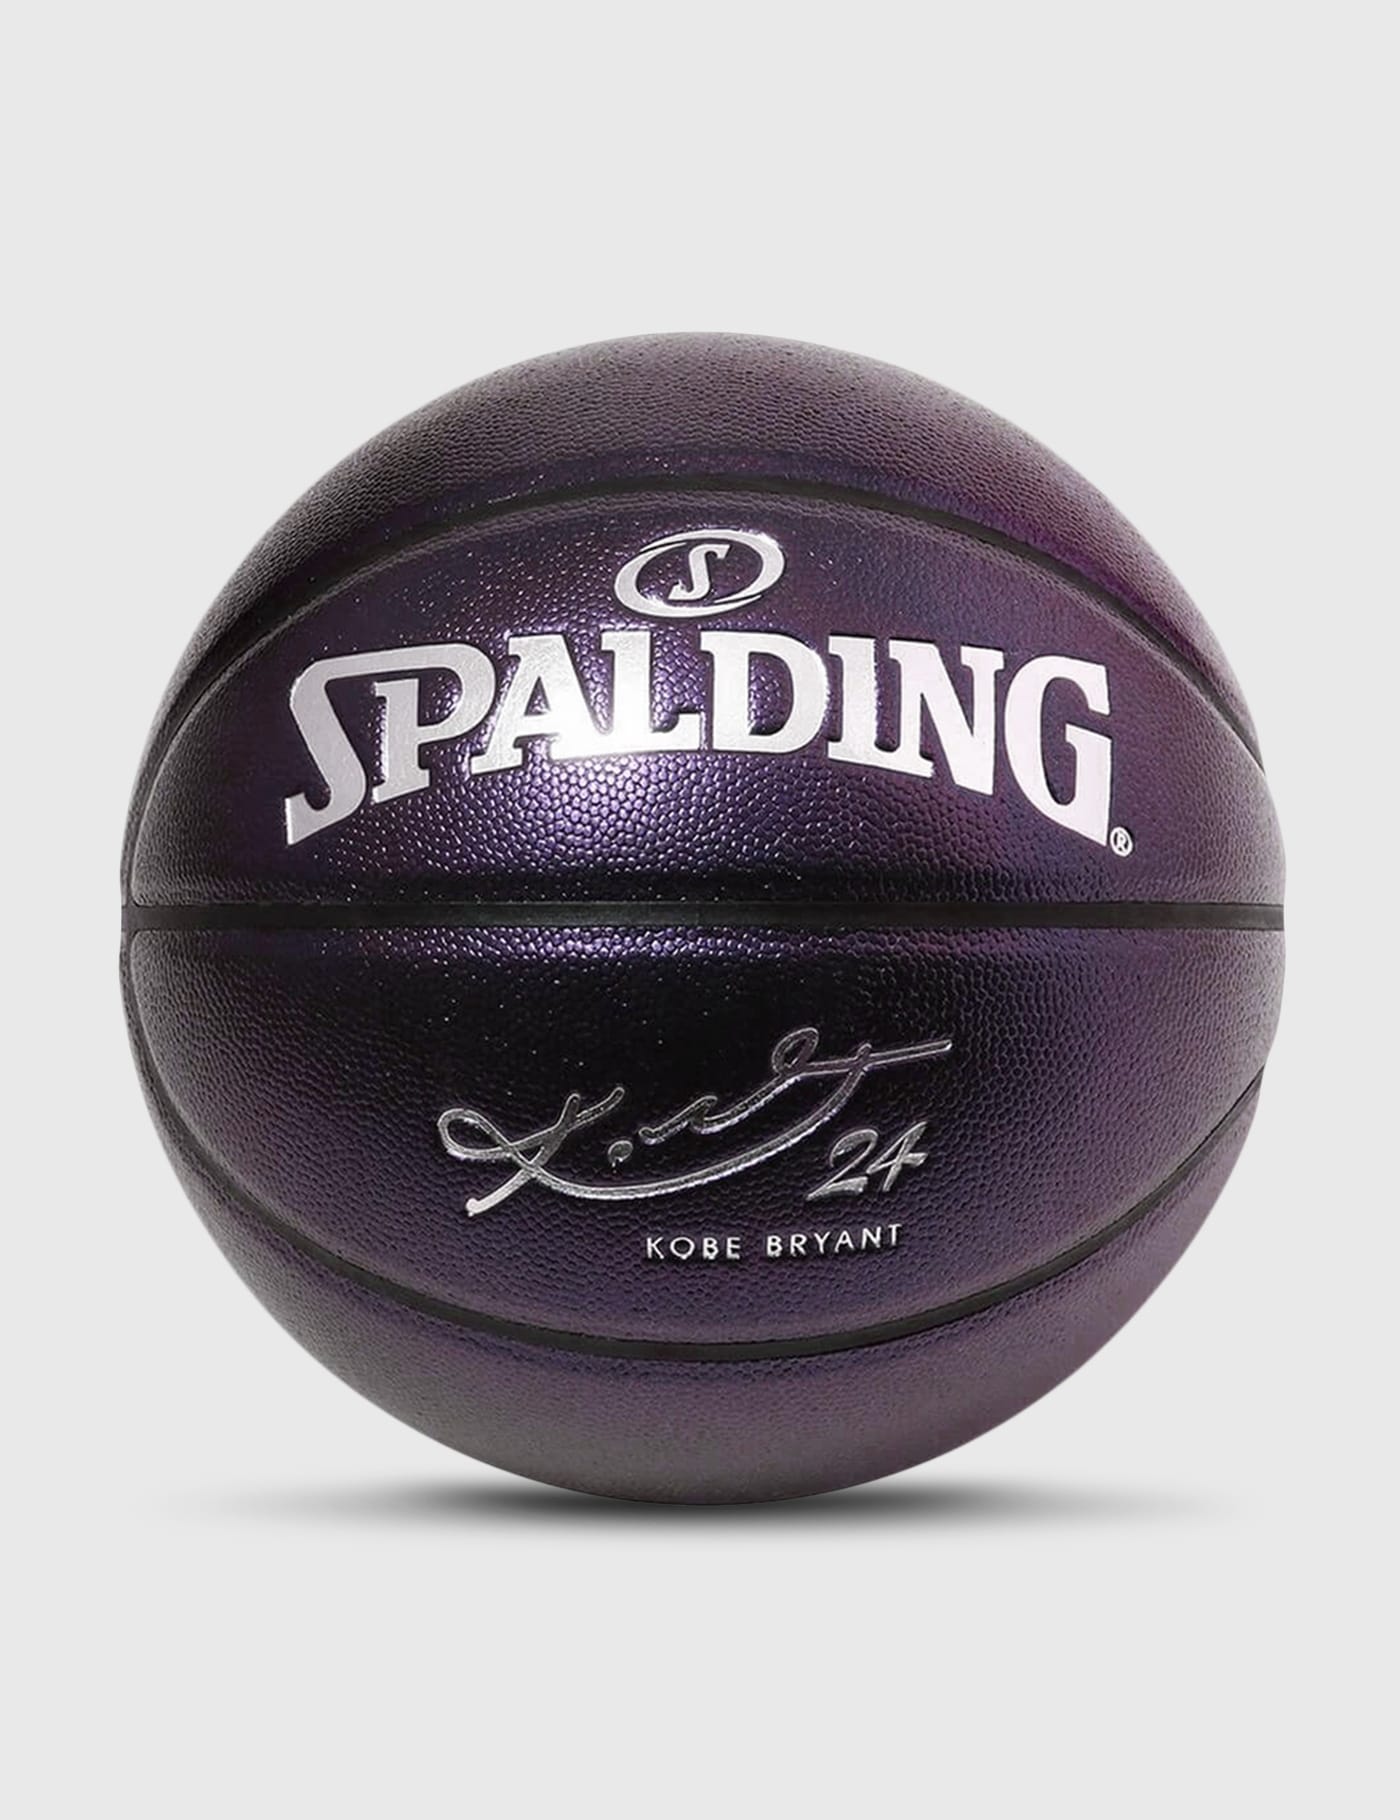 Brand New Spalding Kobe Bryant Signature Basketball Purple Size 7 Indoor Outdoor 